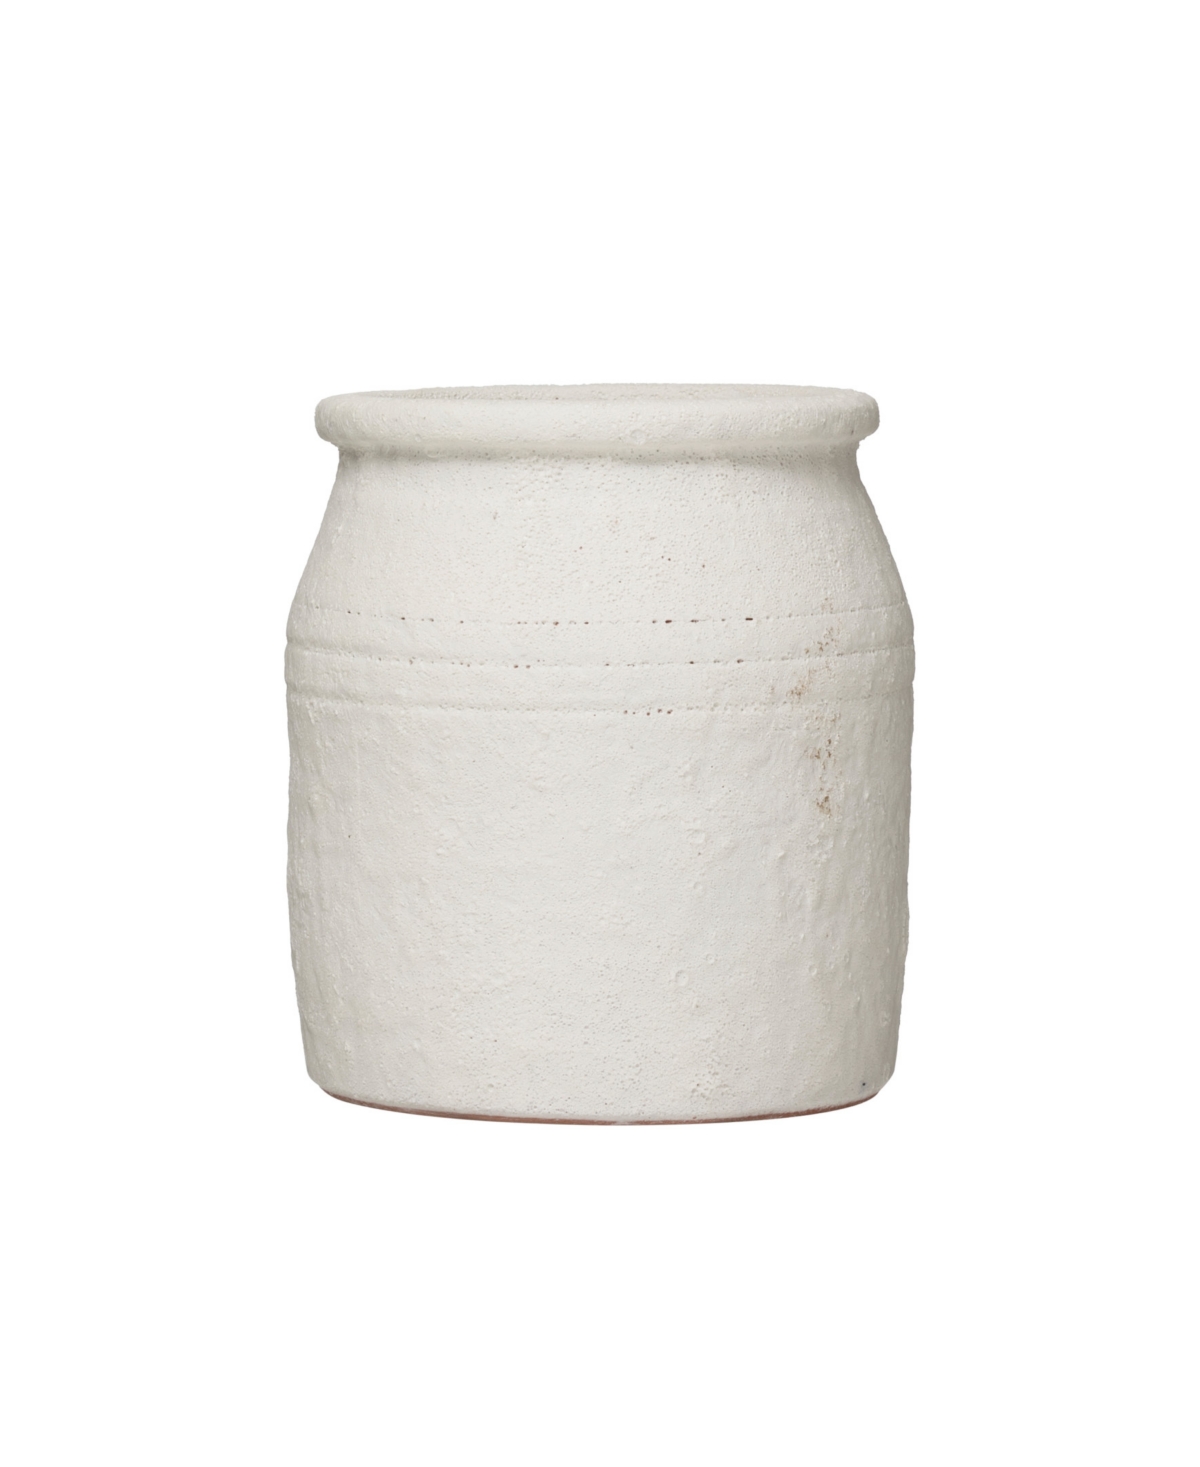 7"H Decorative Coarse Terracotta Crock with Distressed Volcano Glaze - Off-White